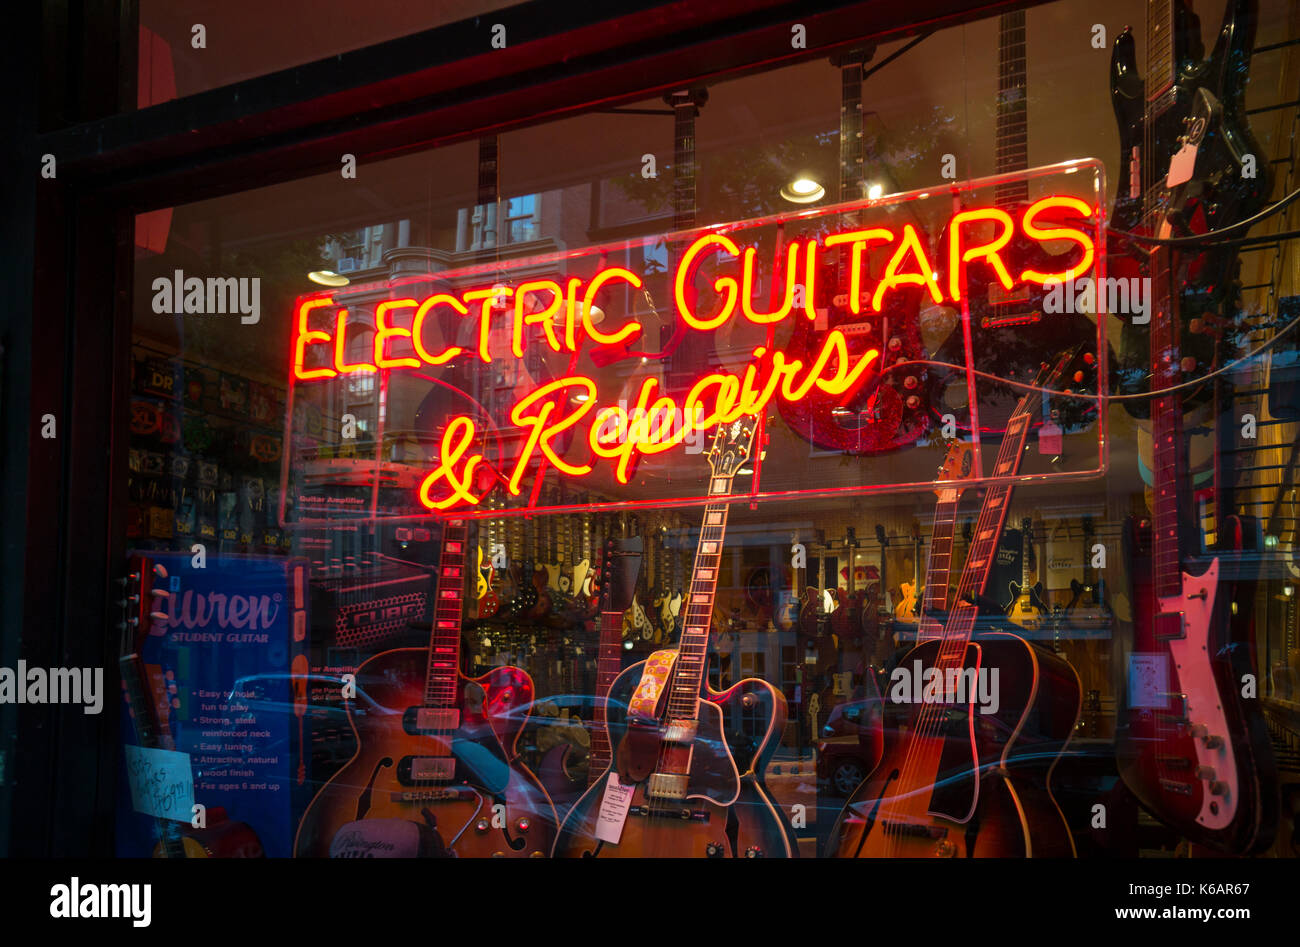 Electric Guitars & Repairs neon sign in store window Stock Photo